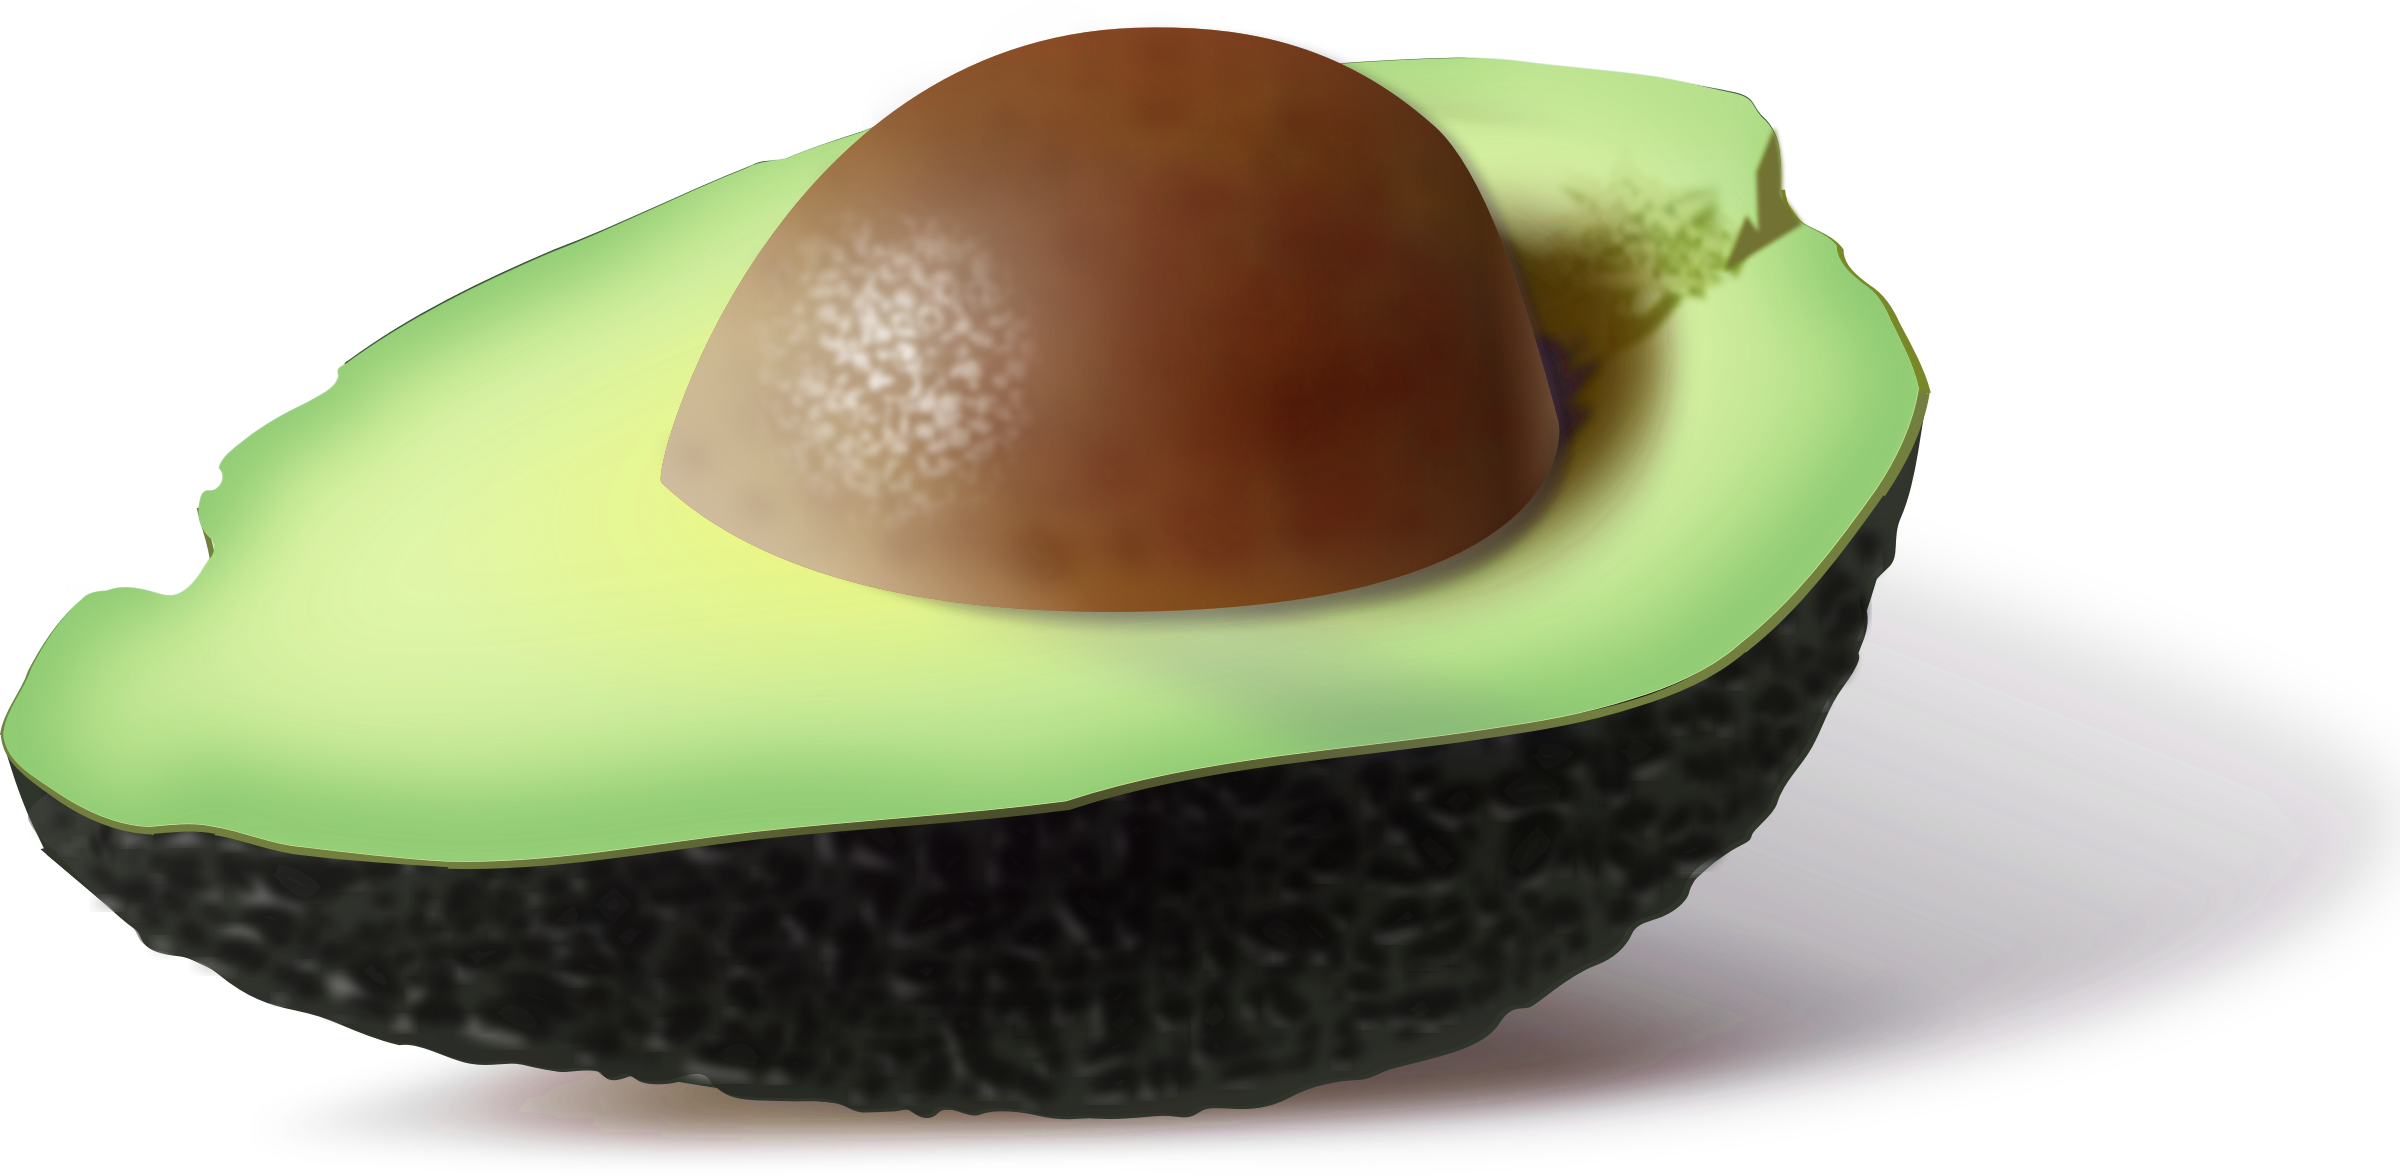 Nut avocado